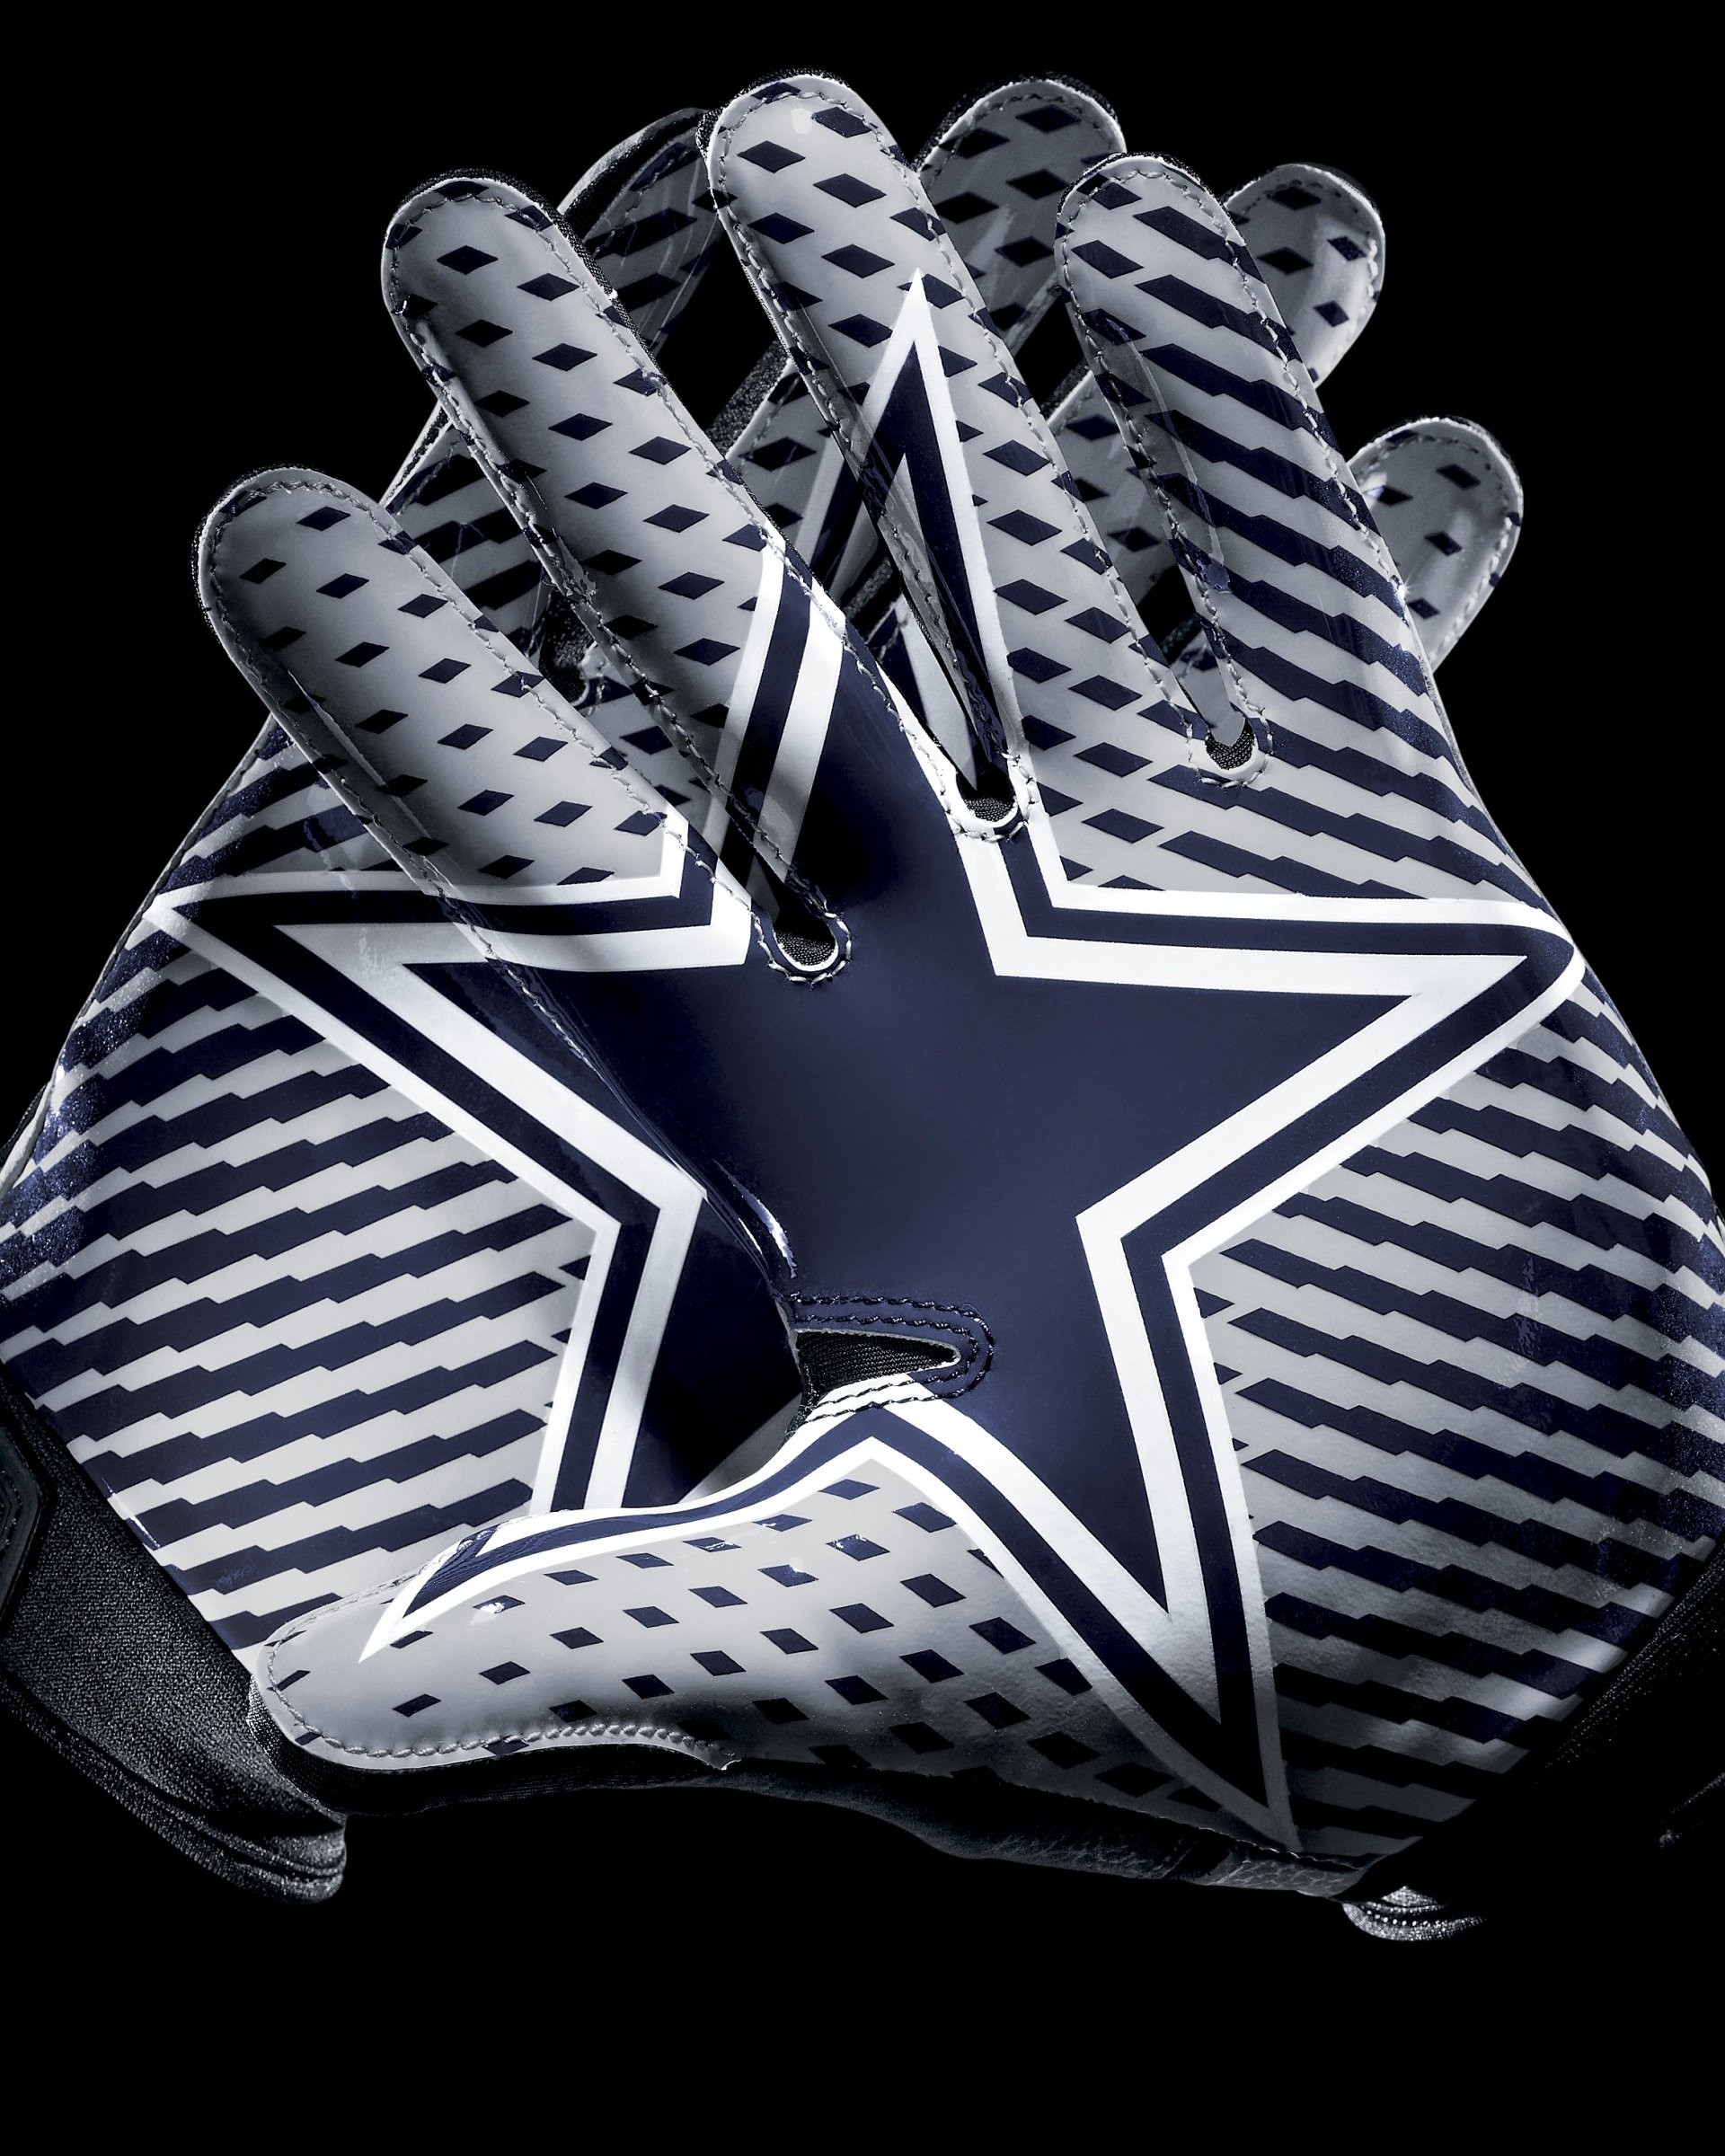 Dallas Cowboys Gloves Wallpaper for Google Nexus 7